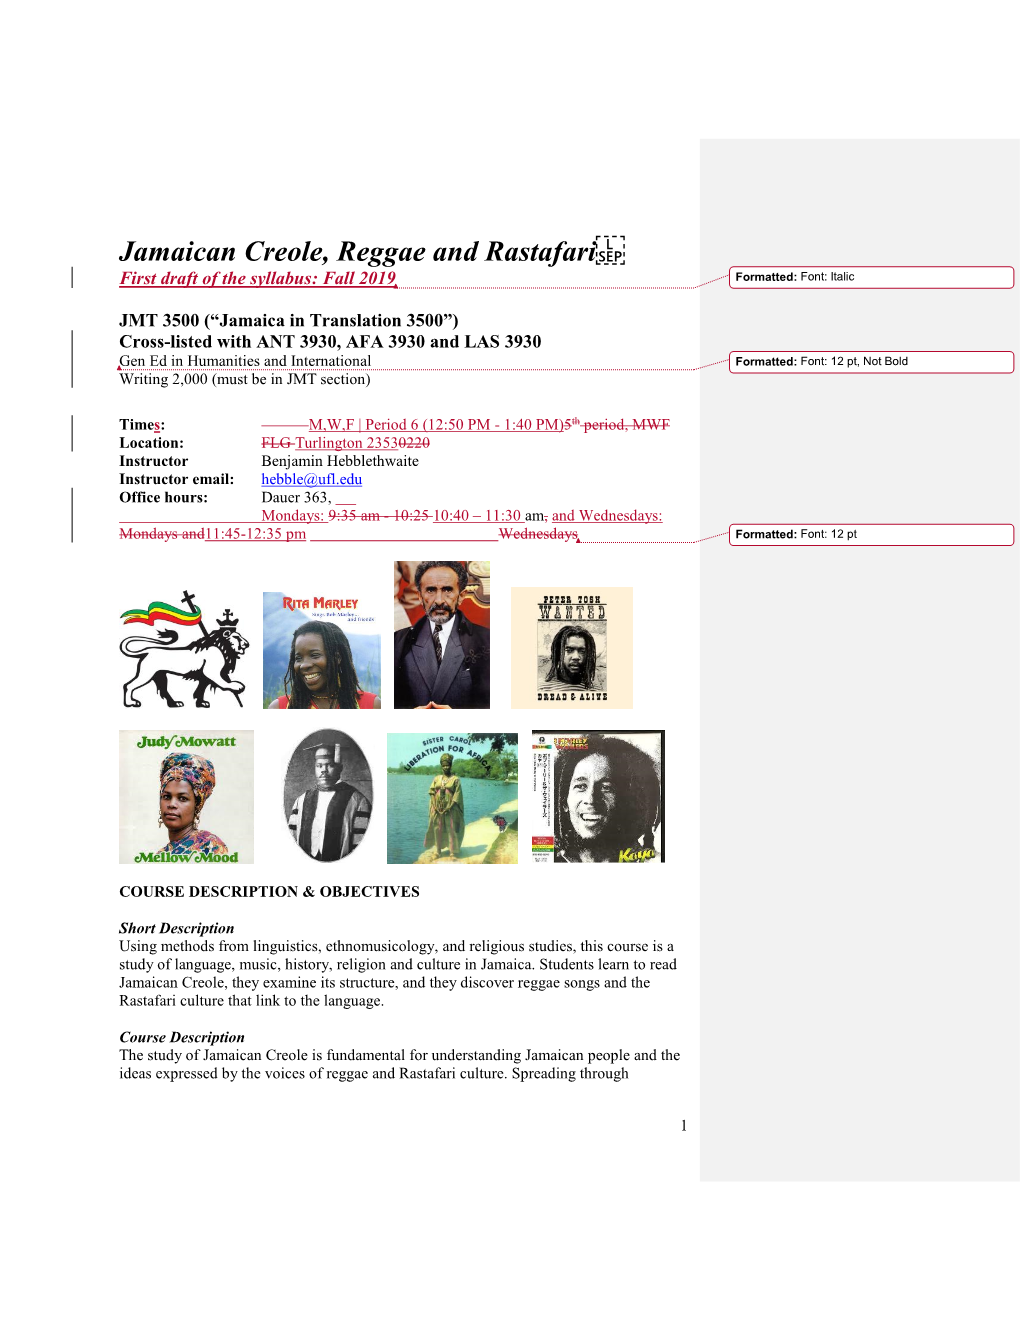 Jamaican Creole, Reggae and Rastafari First Draft of the Syllabus: Fall 2019 Formatted: Font: Italic